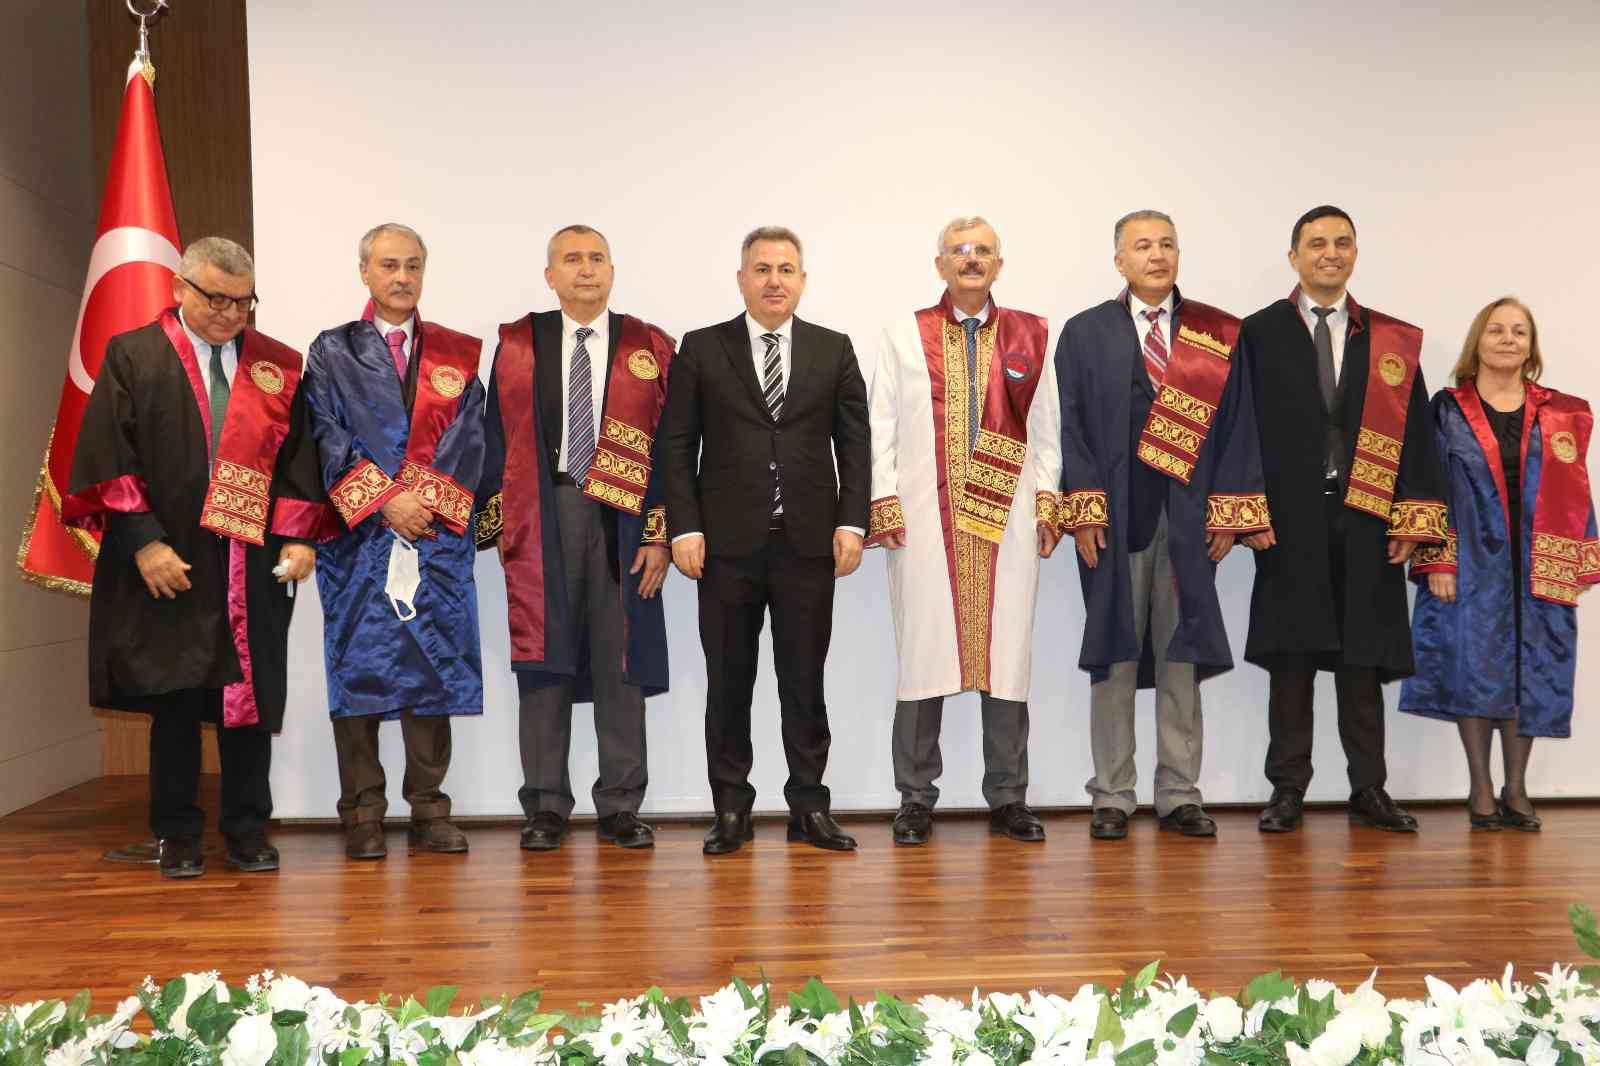 Adana’da akademisyenler cübbe giydi #adana